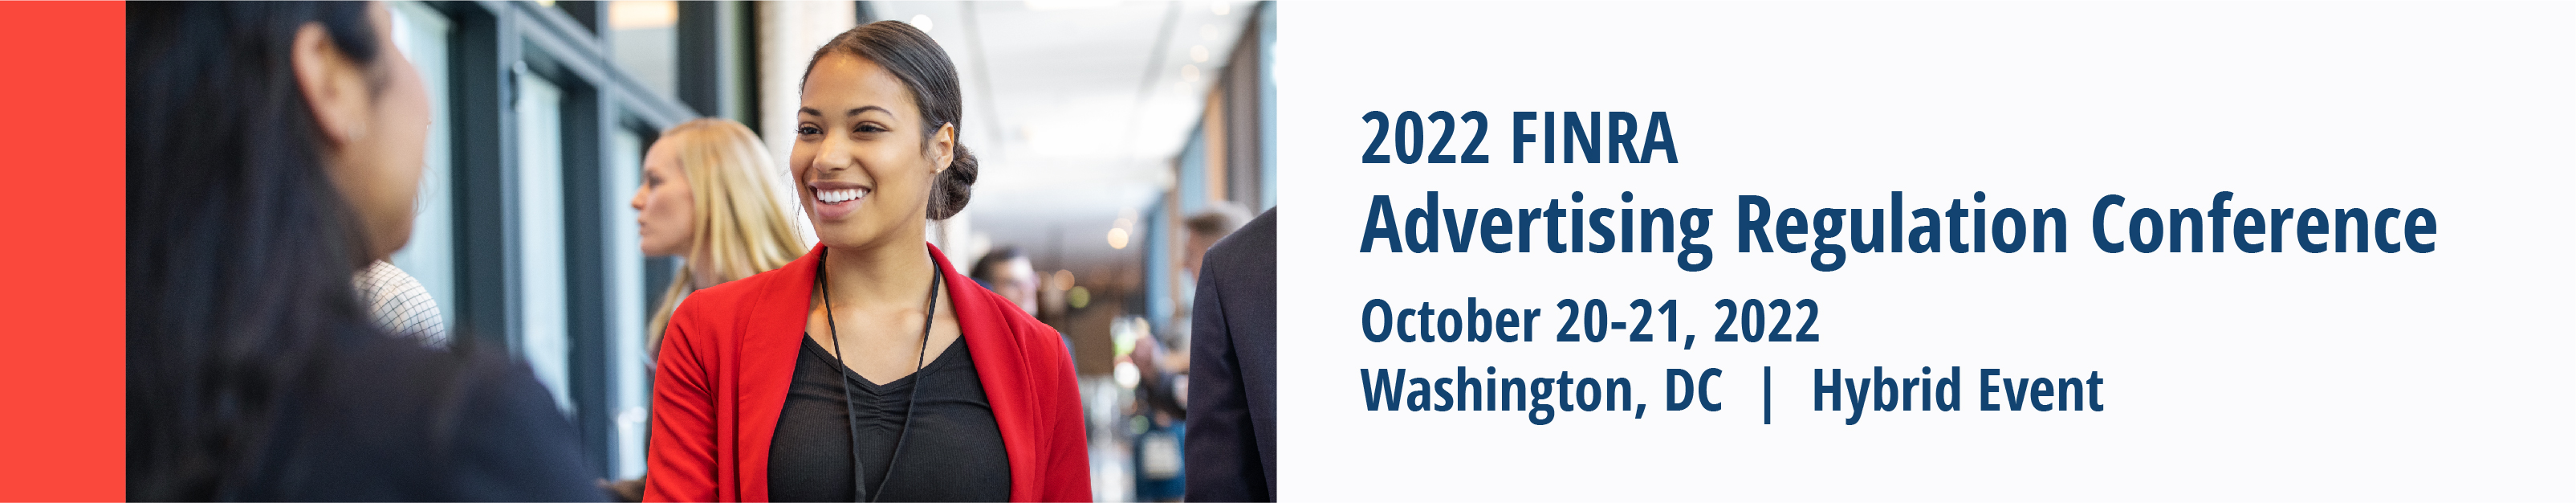 2022 FINRA Advertising Regulation Conference | Oct 20 - 21, 2022 | Washington, DC | Hybrid Event